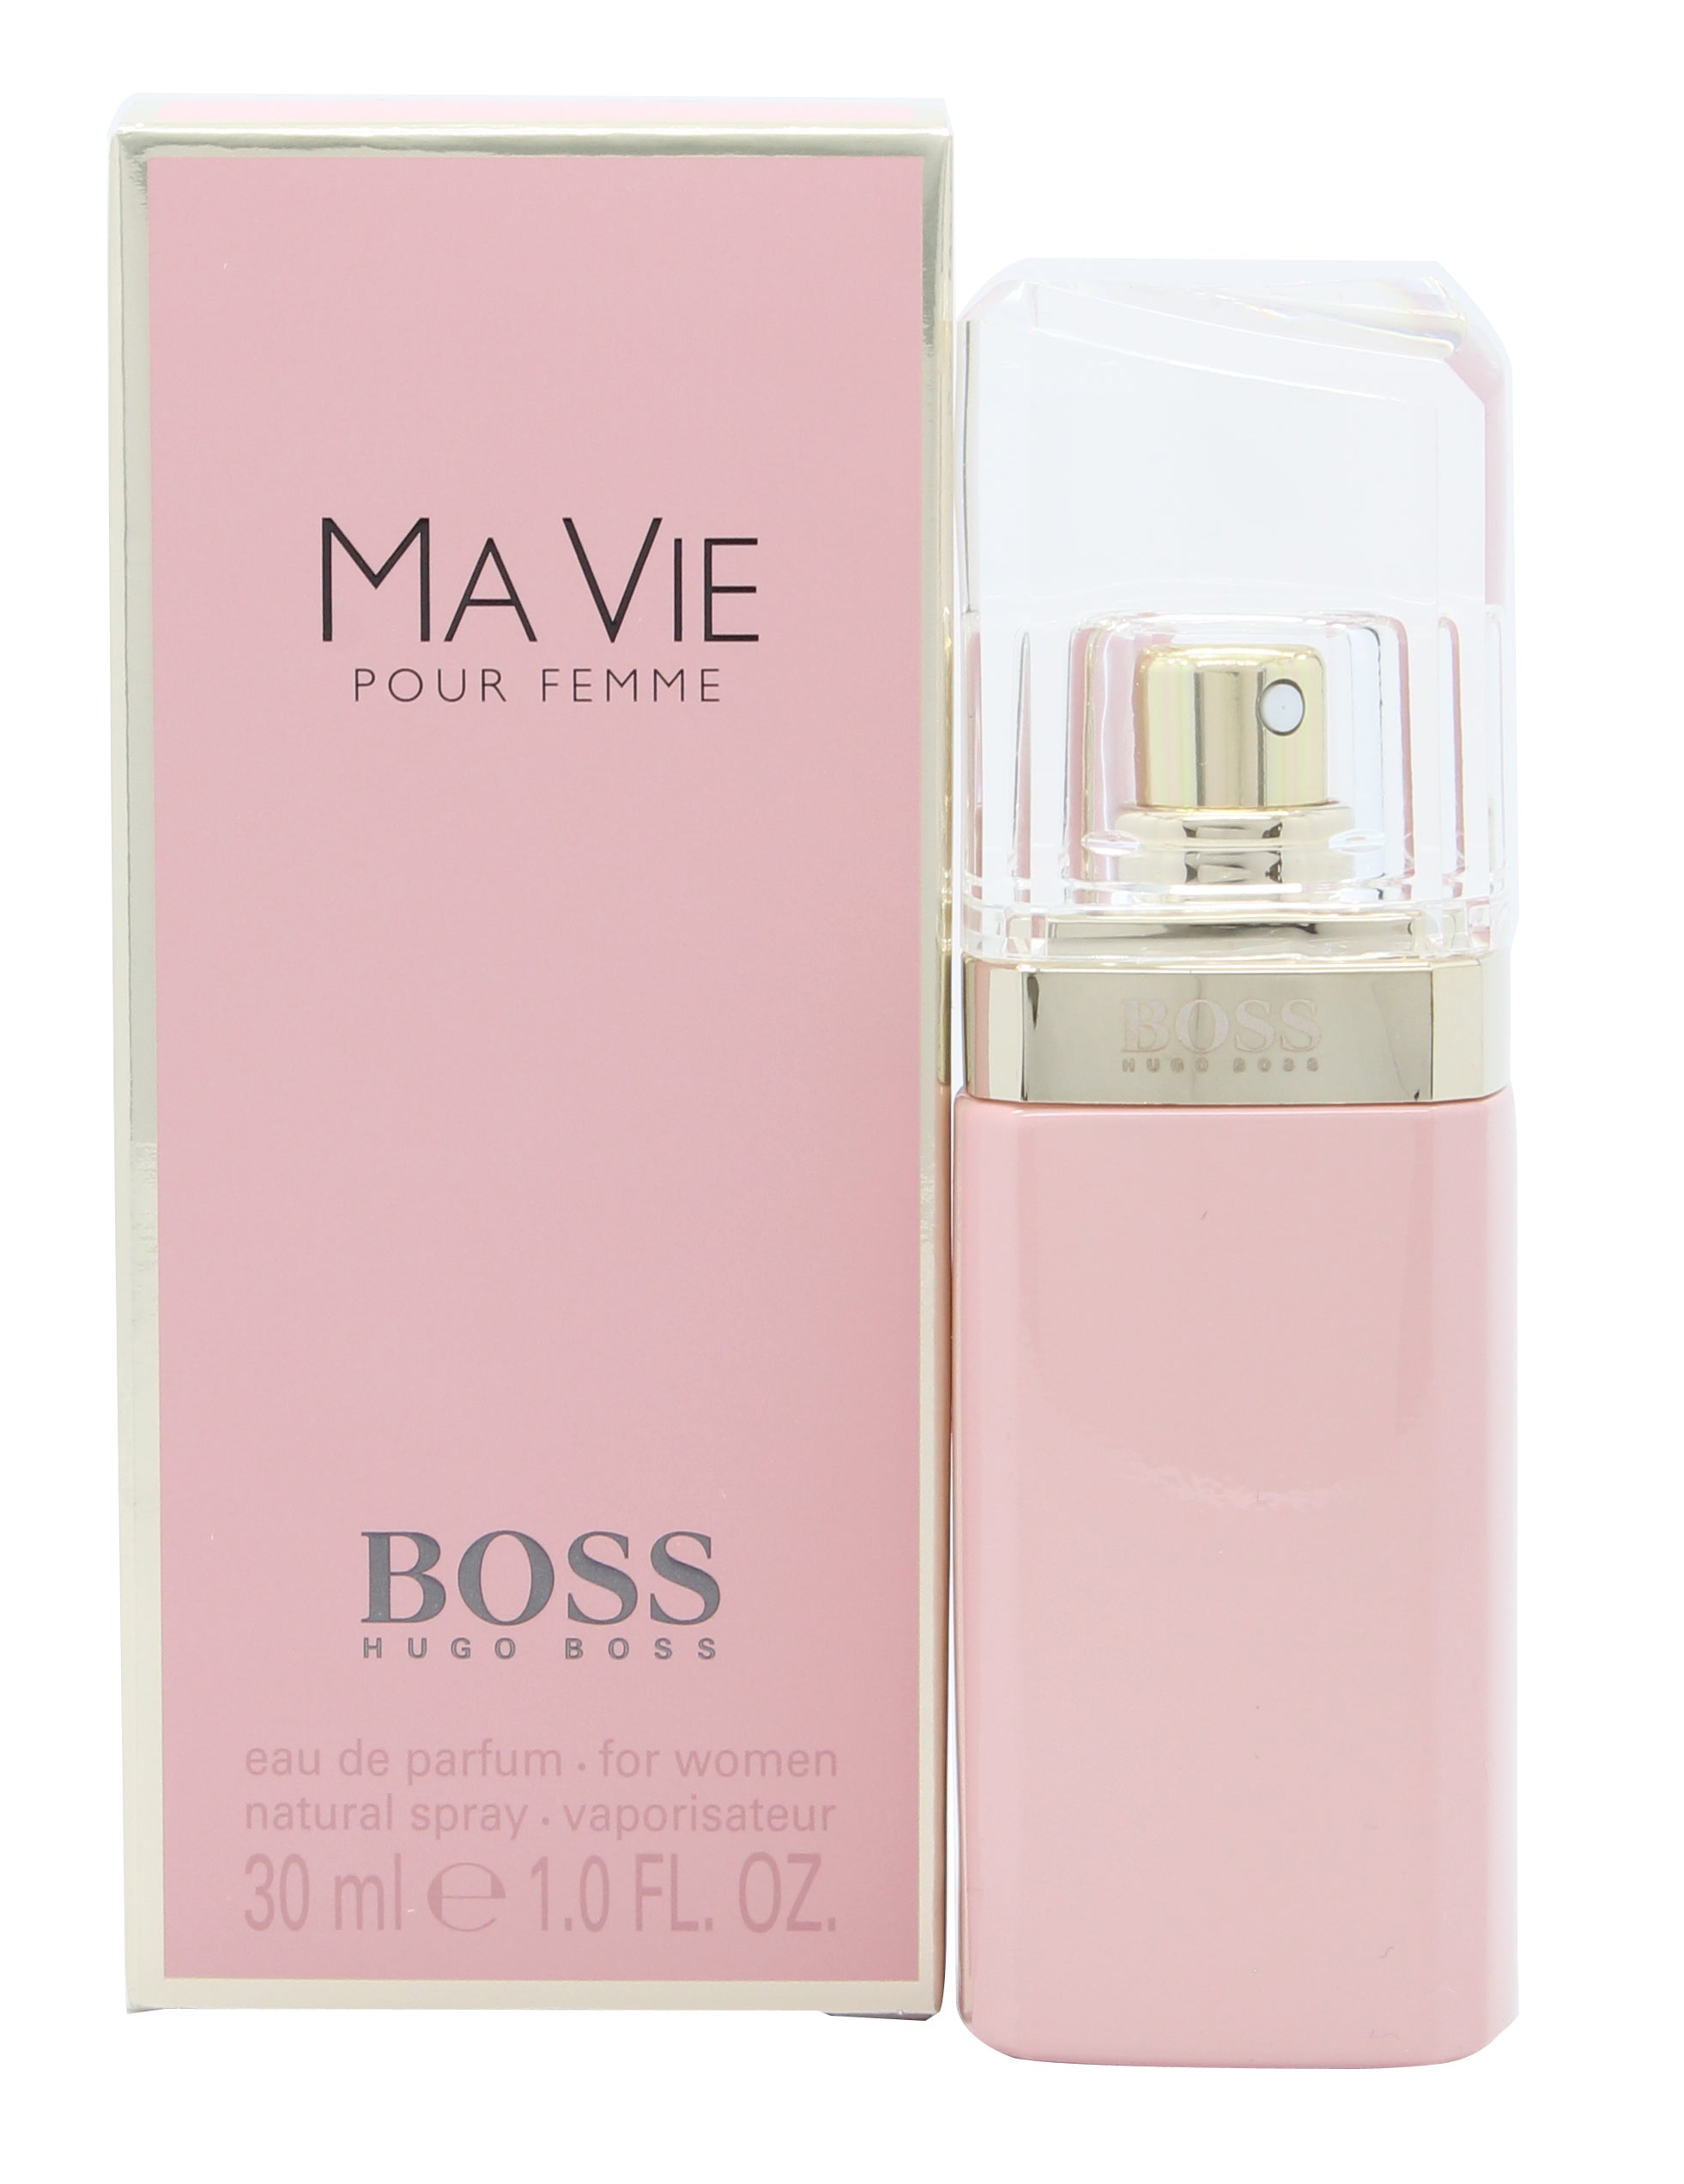 View Hugo Boss Boss Ma Vie Eau de Parfum 30ml Spray information